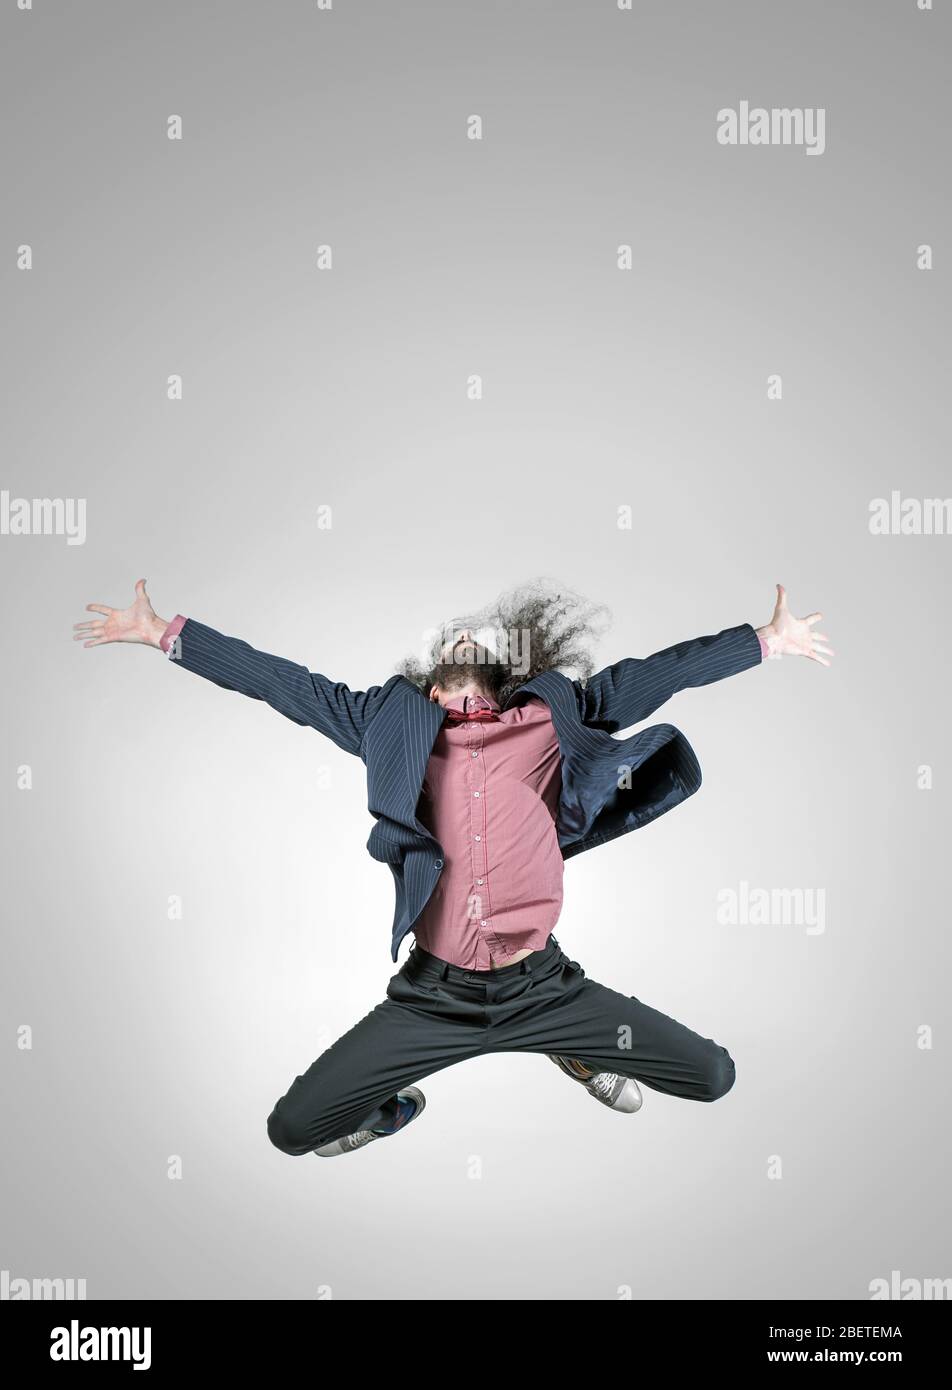 Skinny, elegant guy in a jumping pose Stock Photo